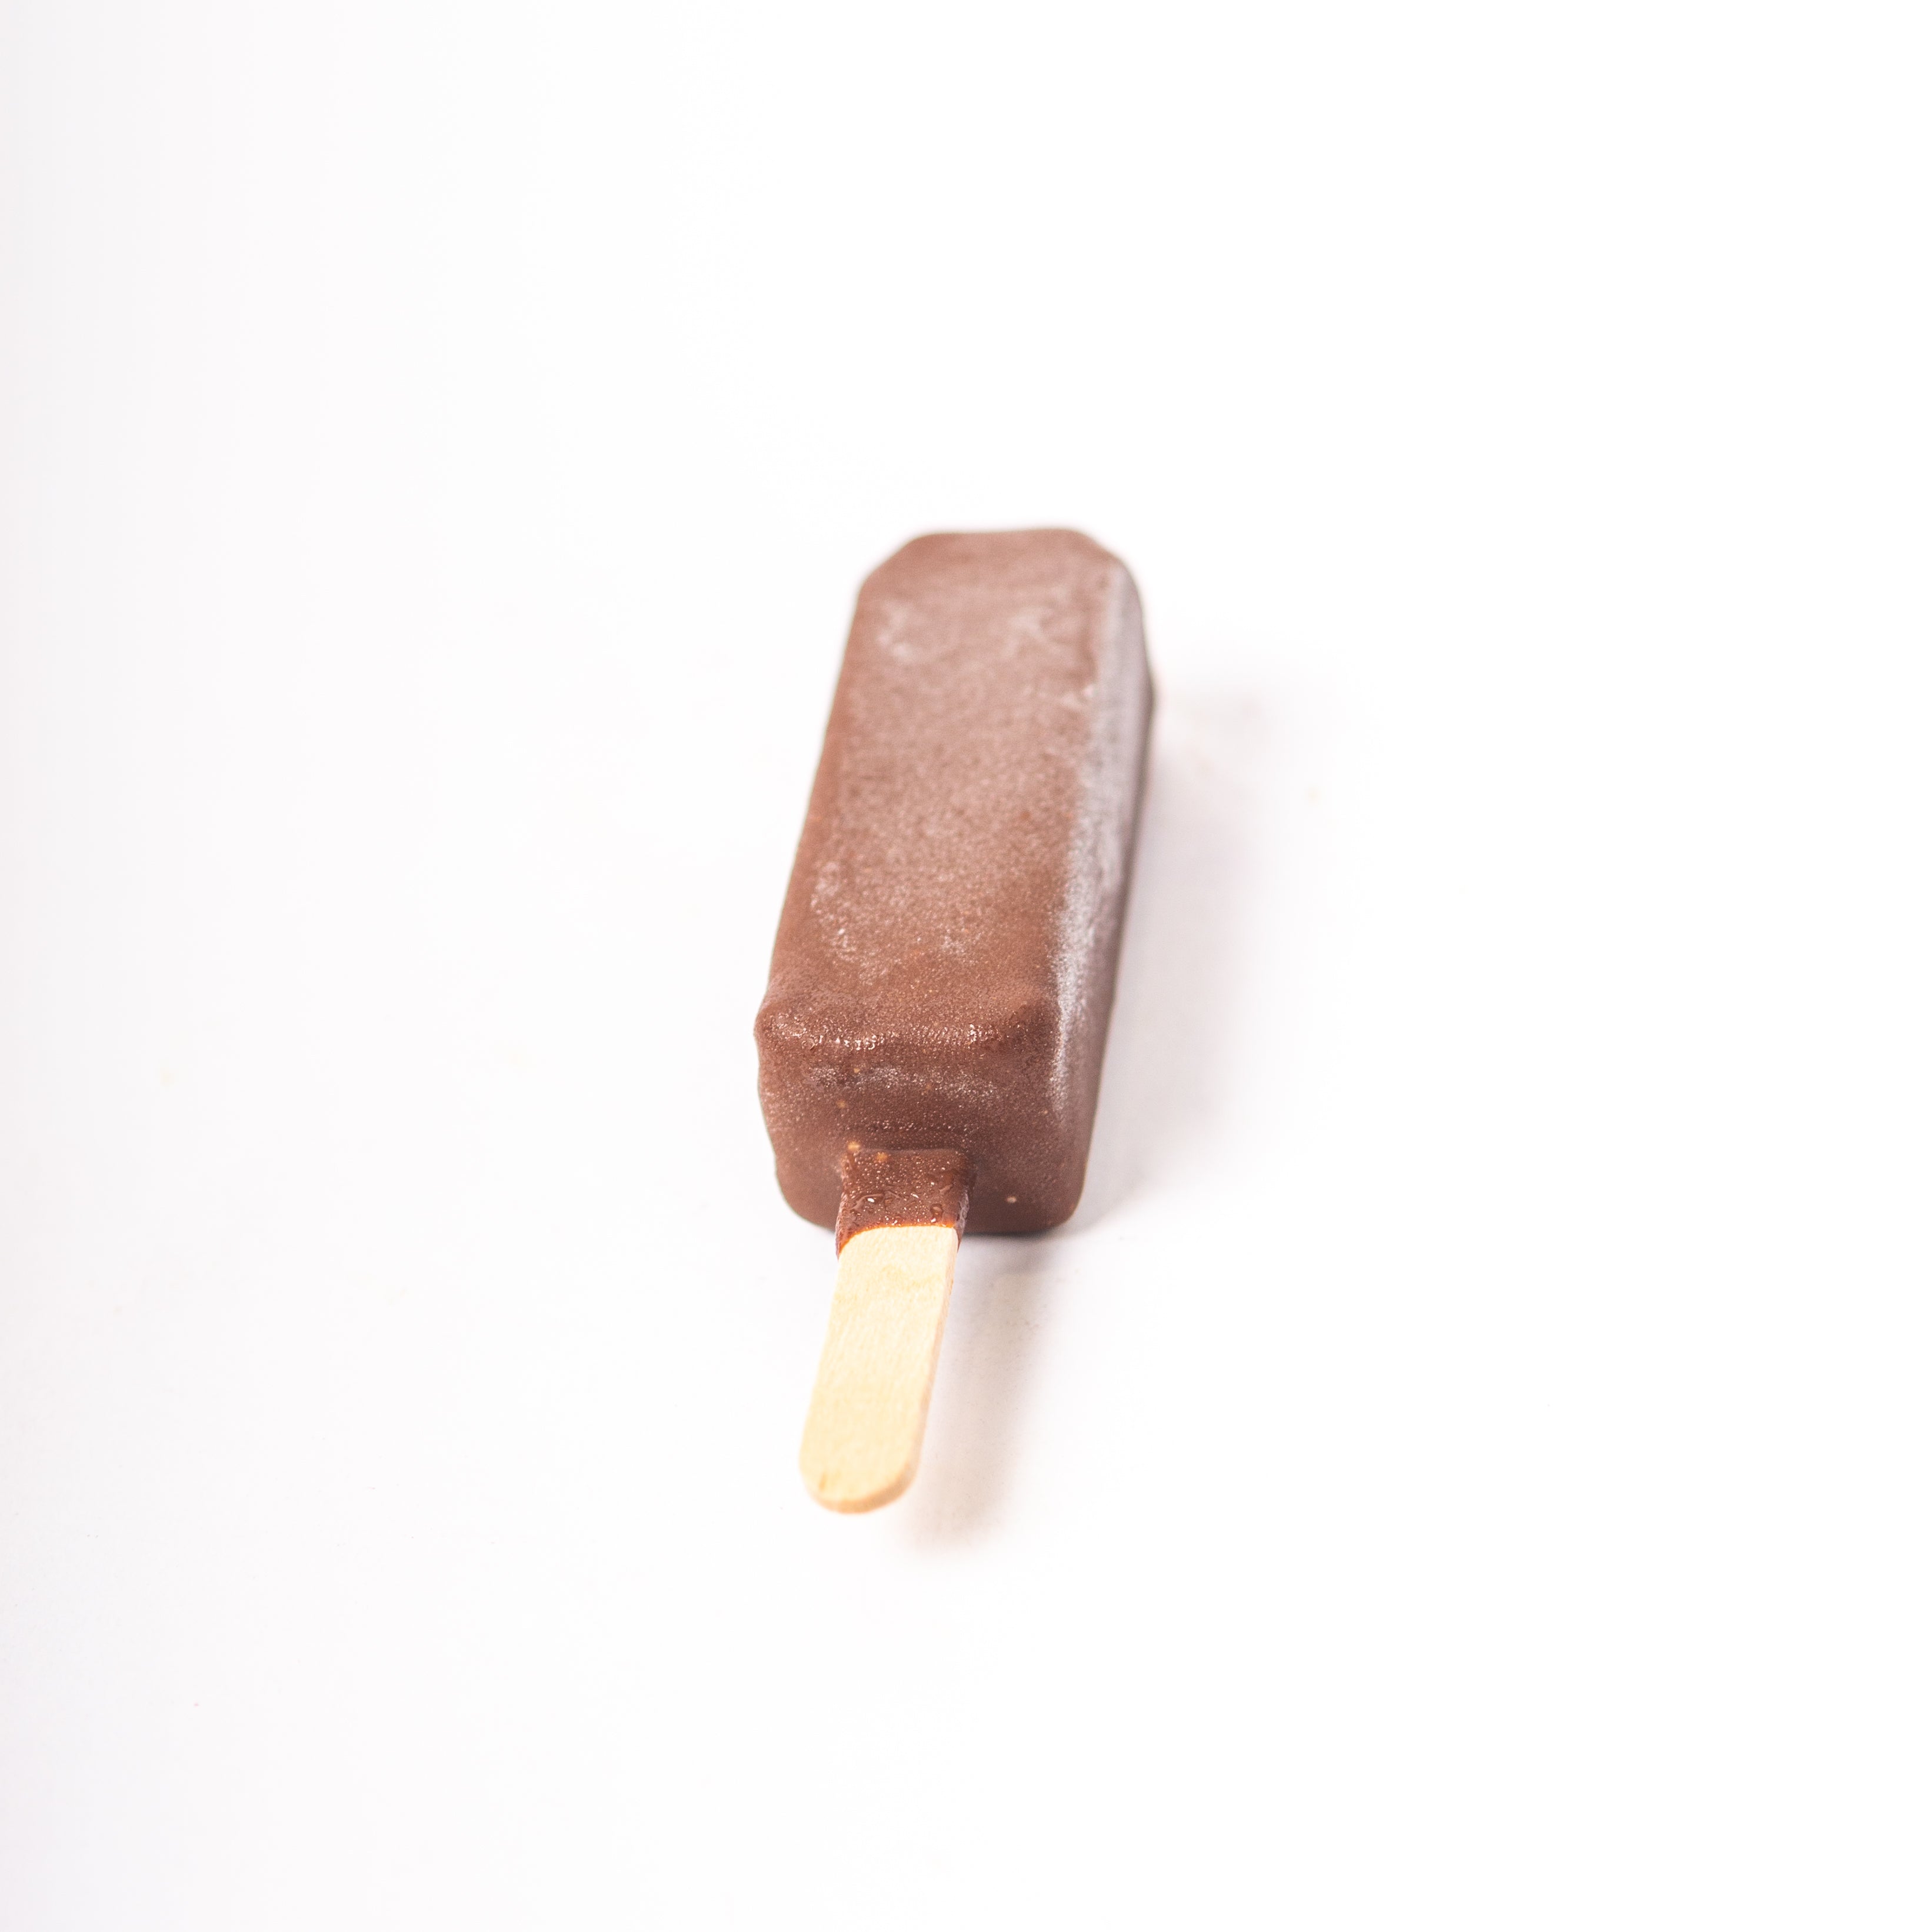 Mini frisco vanille omhuld met fondant chocolade 12st.